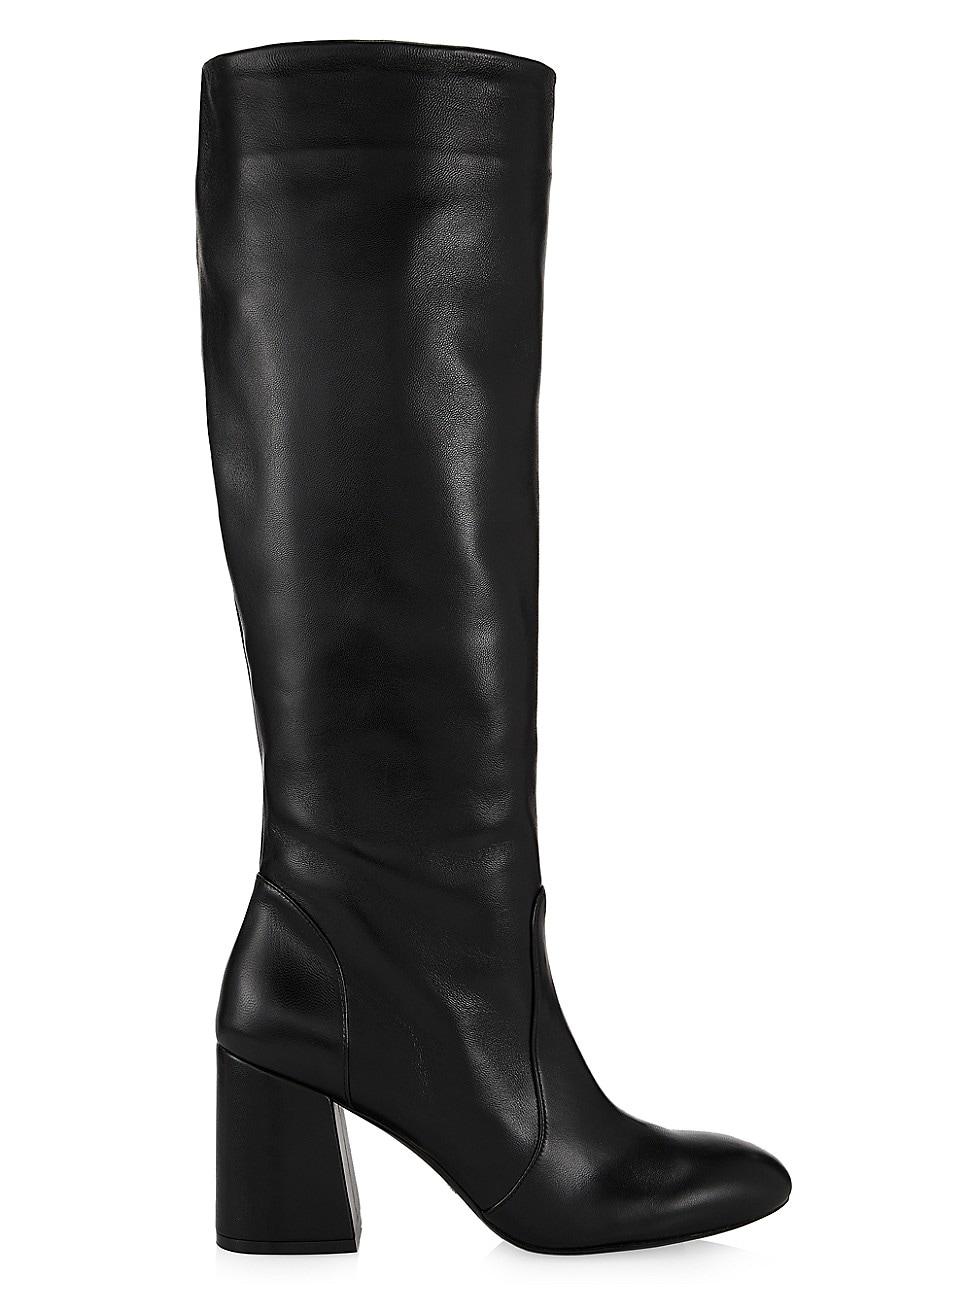 Stuart Weitzman Flareblock 85mm Leather Slouch Boots in Black | Lyst